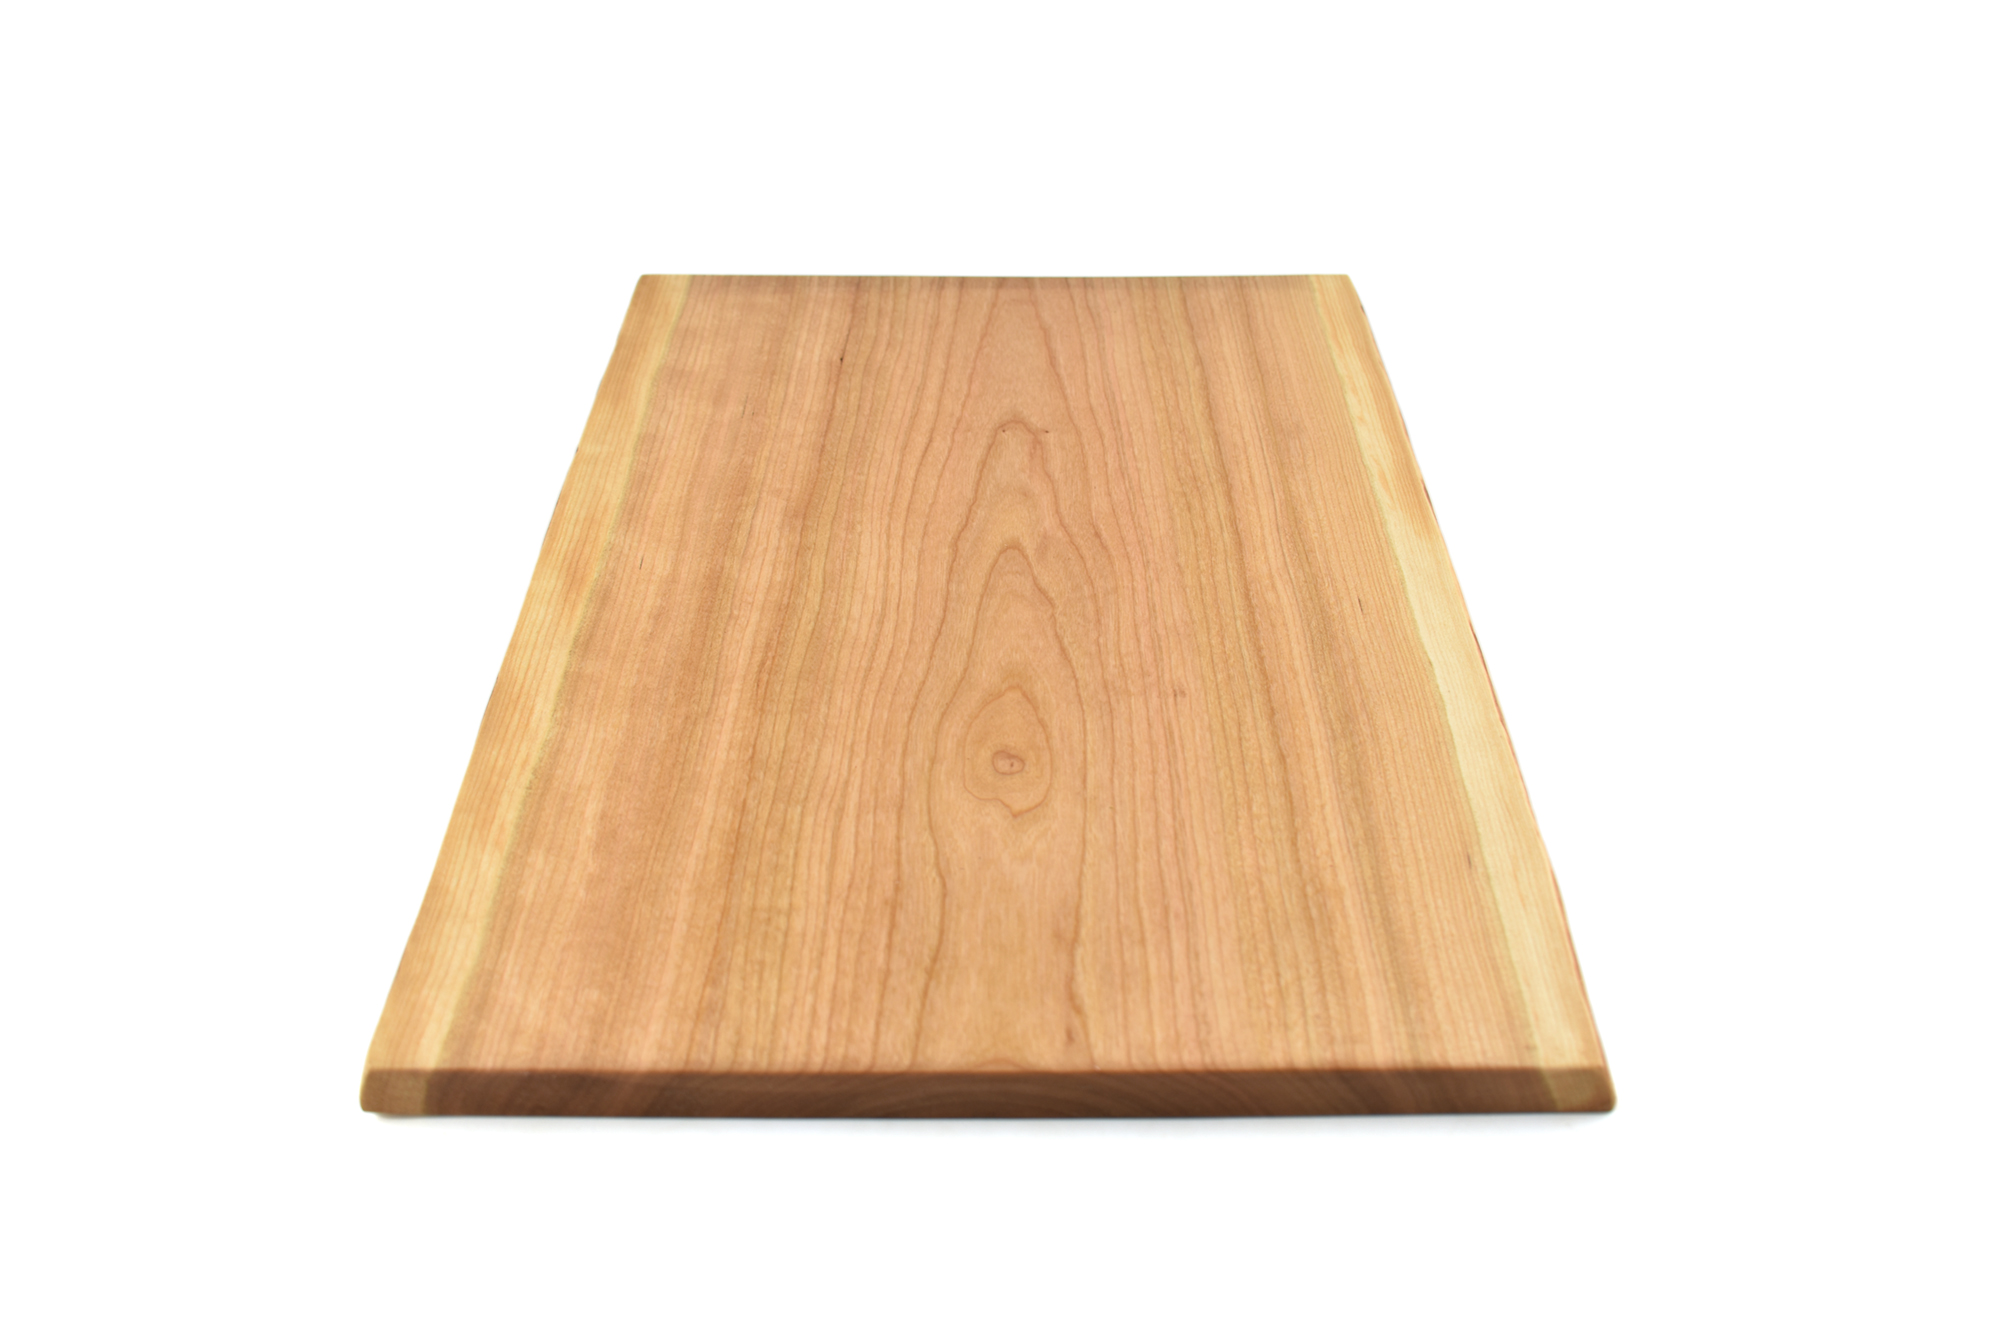 Medium live edge rectangular wood serving board